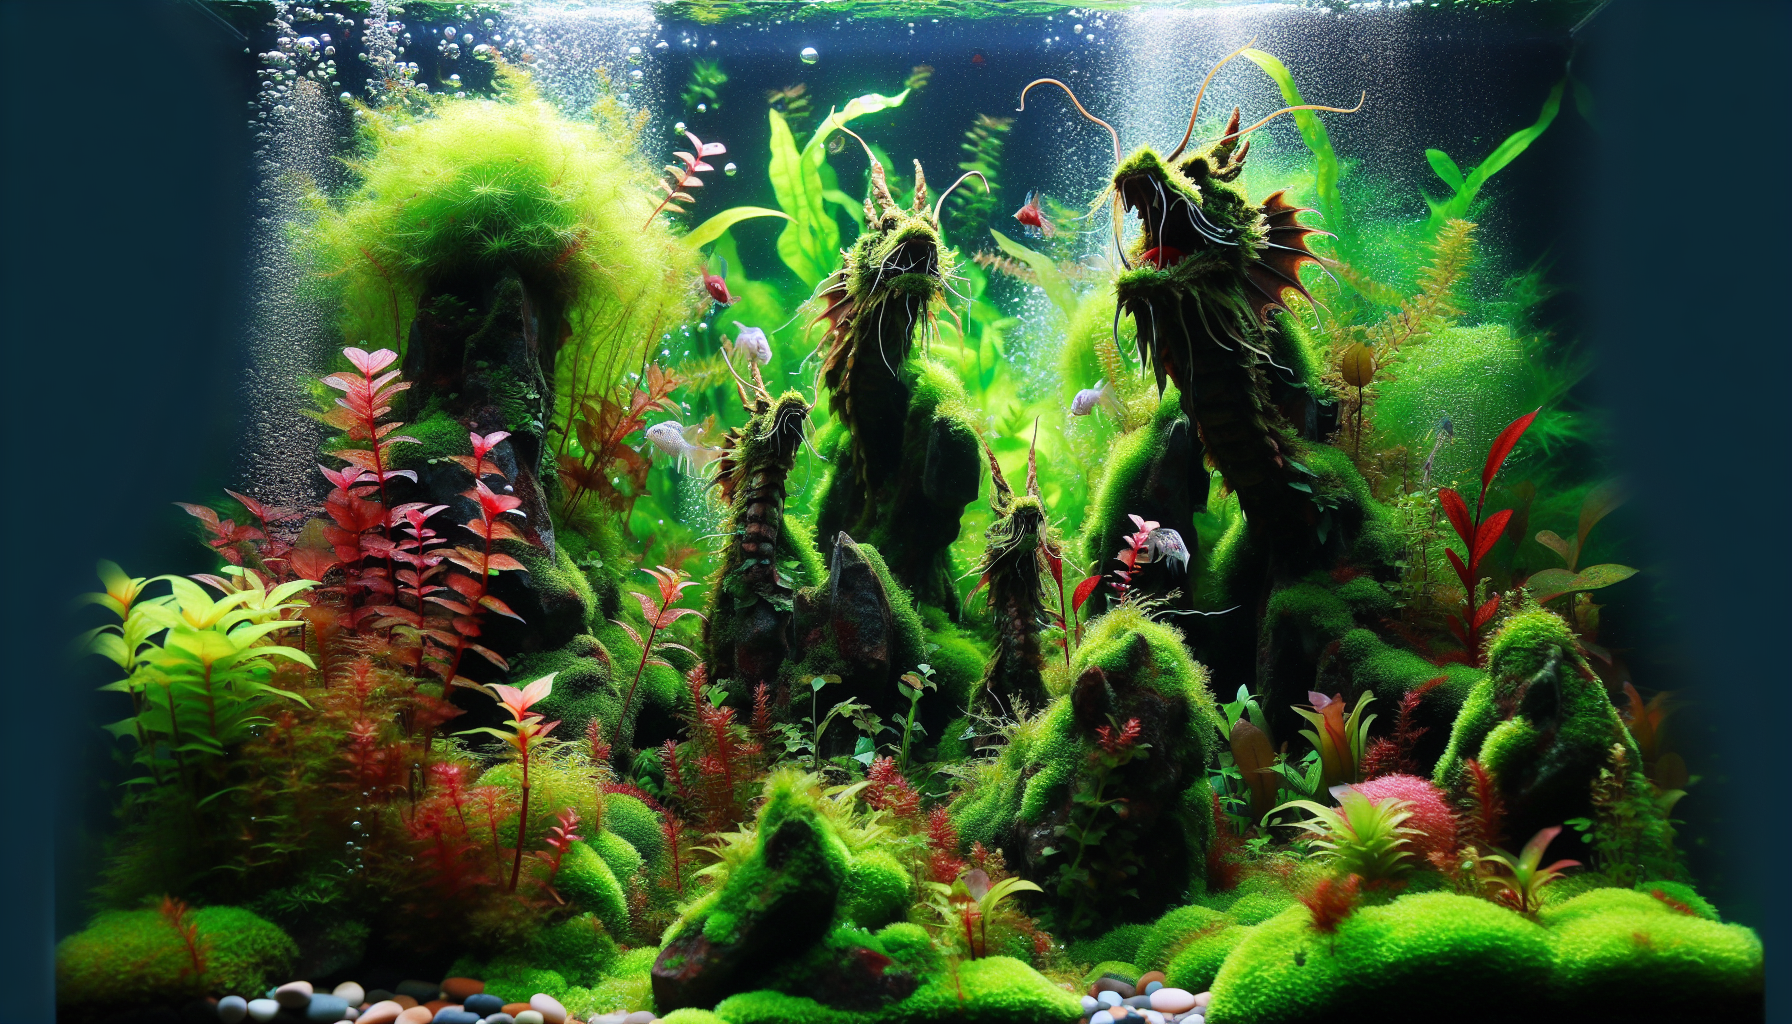 Aquascape with Dragon Stone and aquatic plants